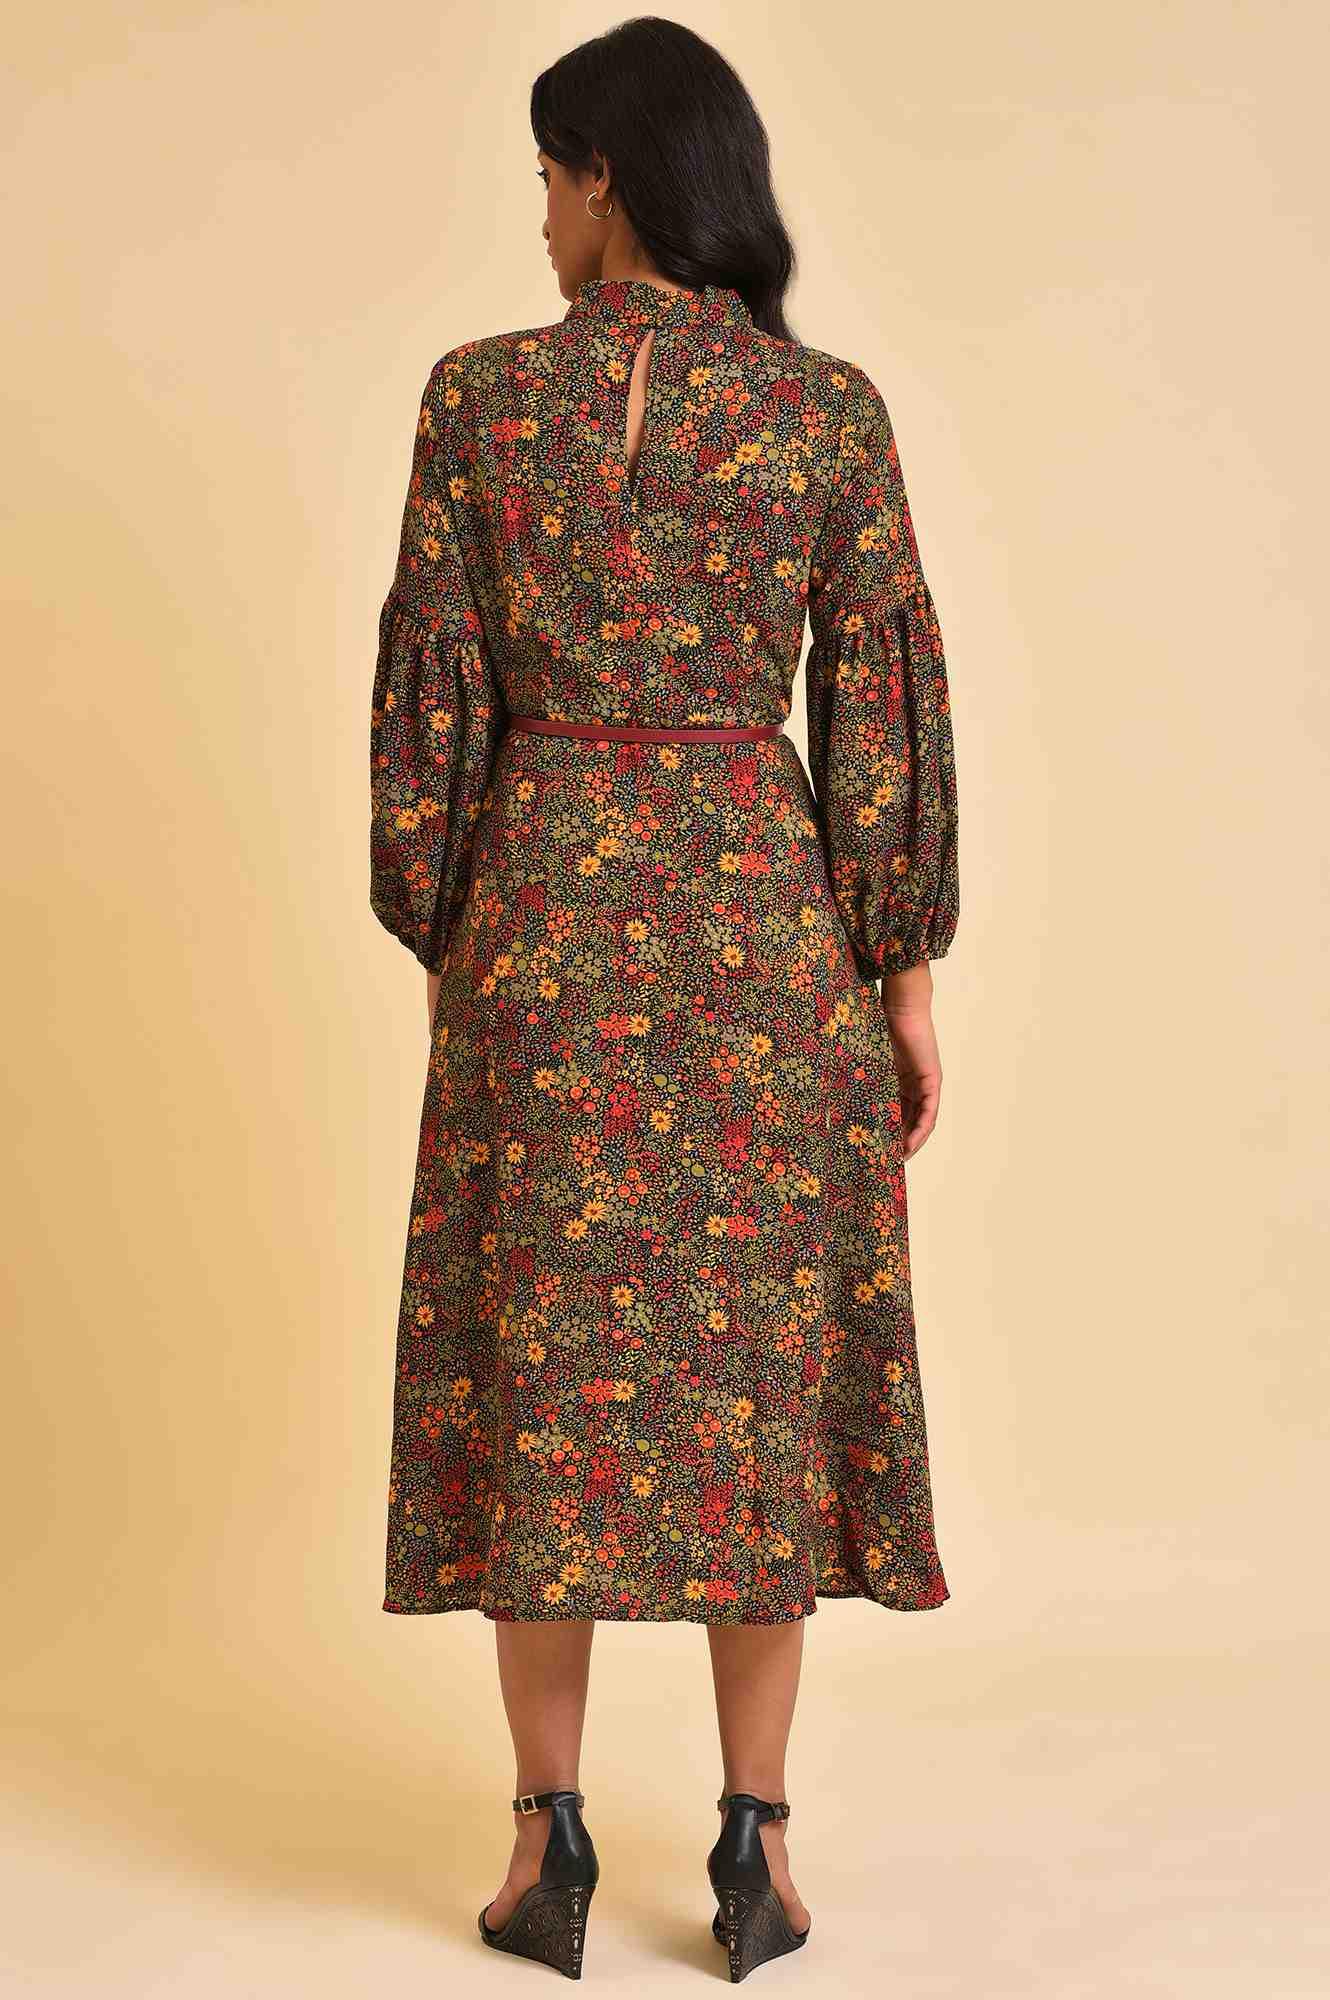 Bright Multi-Coloured Floral Print Dress - wforwoman